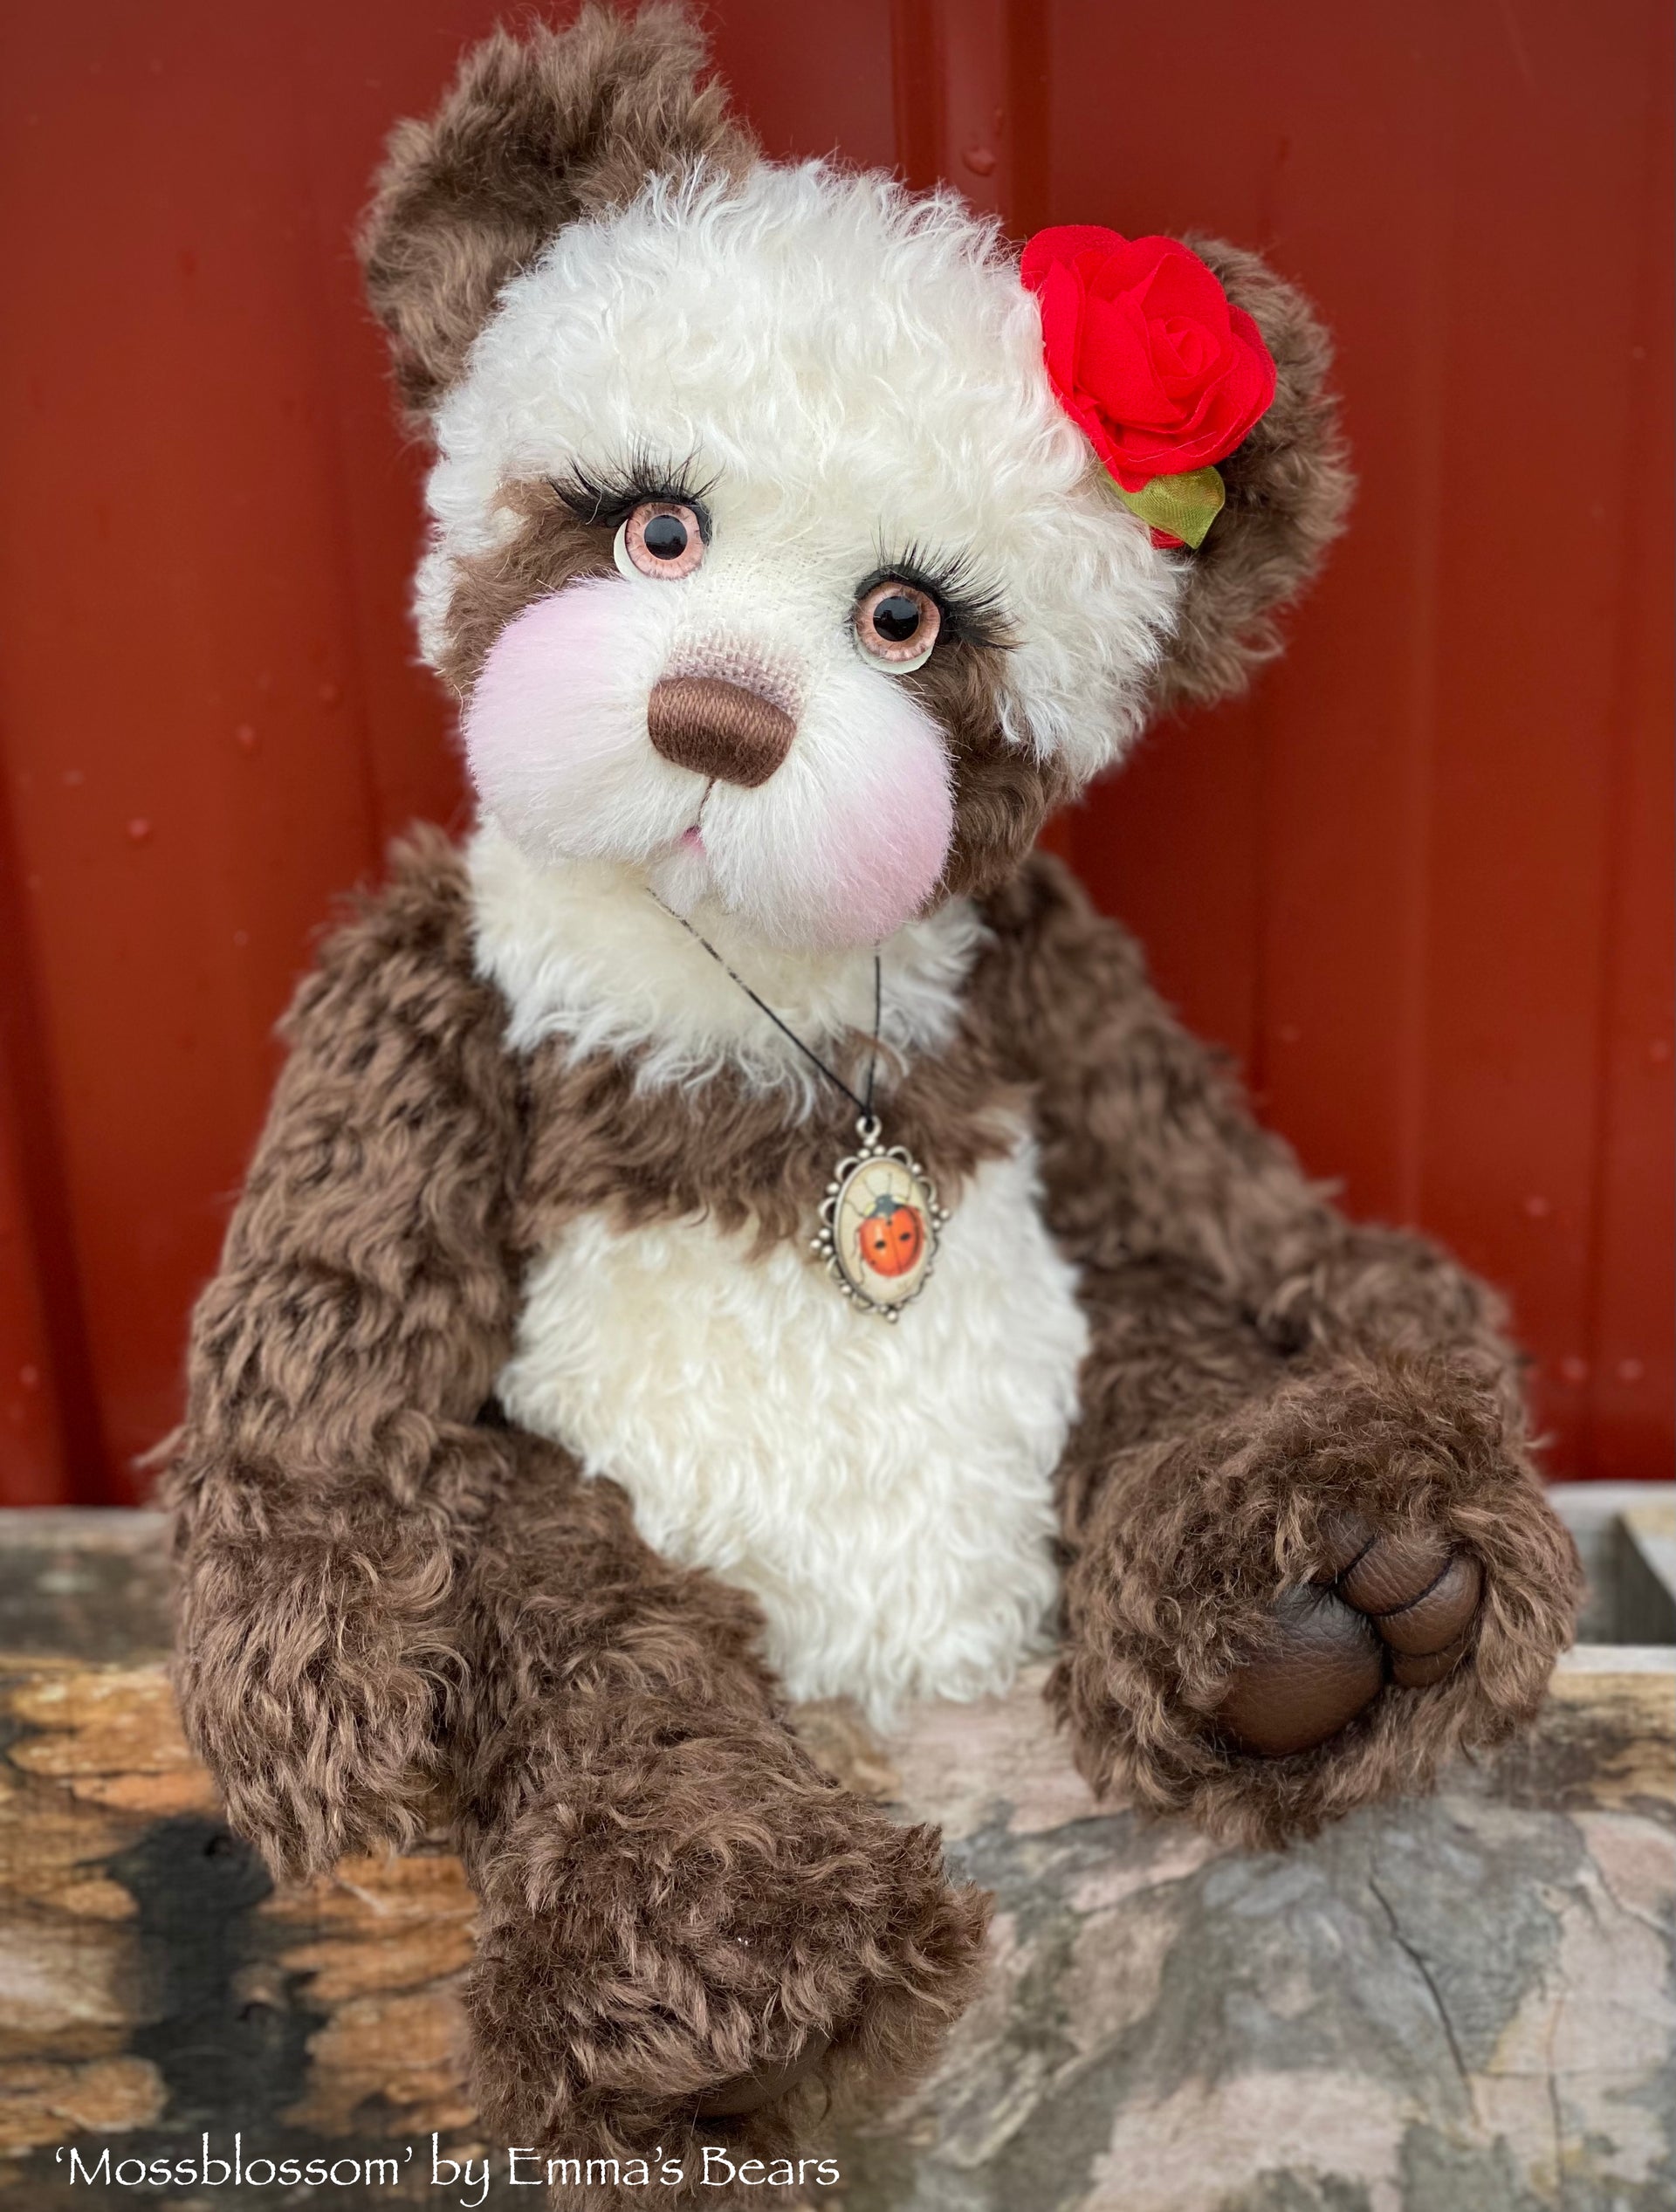 Mossblossom - 16" Curly Kid Mohair and Alpaca artist bear by Emma's Bears - OOAK